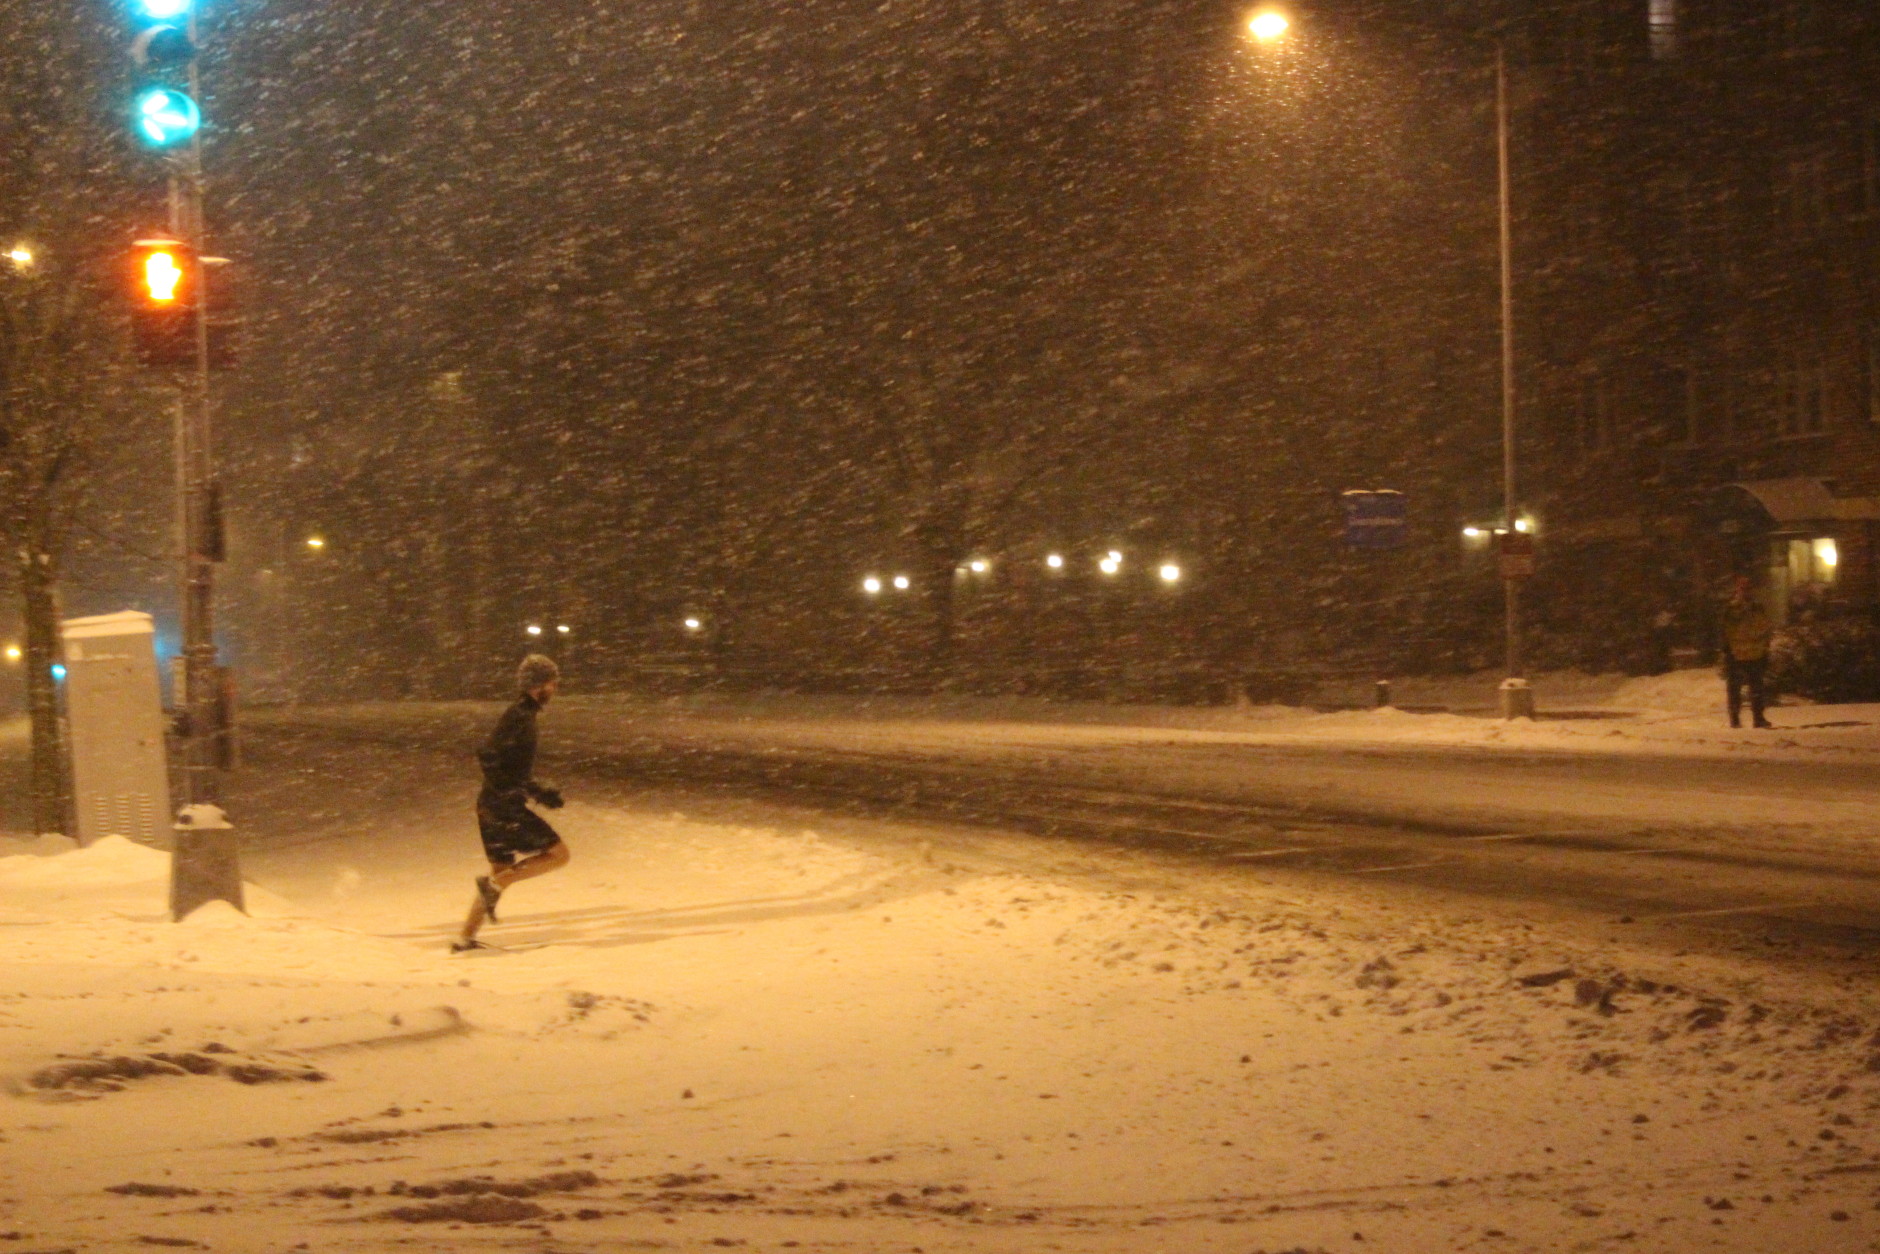 A dedicated runner crosses Wisconsin Avenue on Friday night. (WTOP/Dana Gooley)